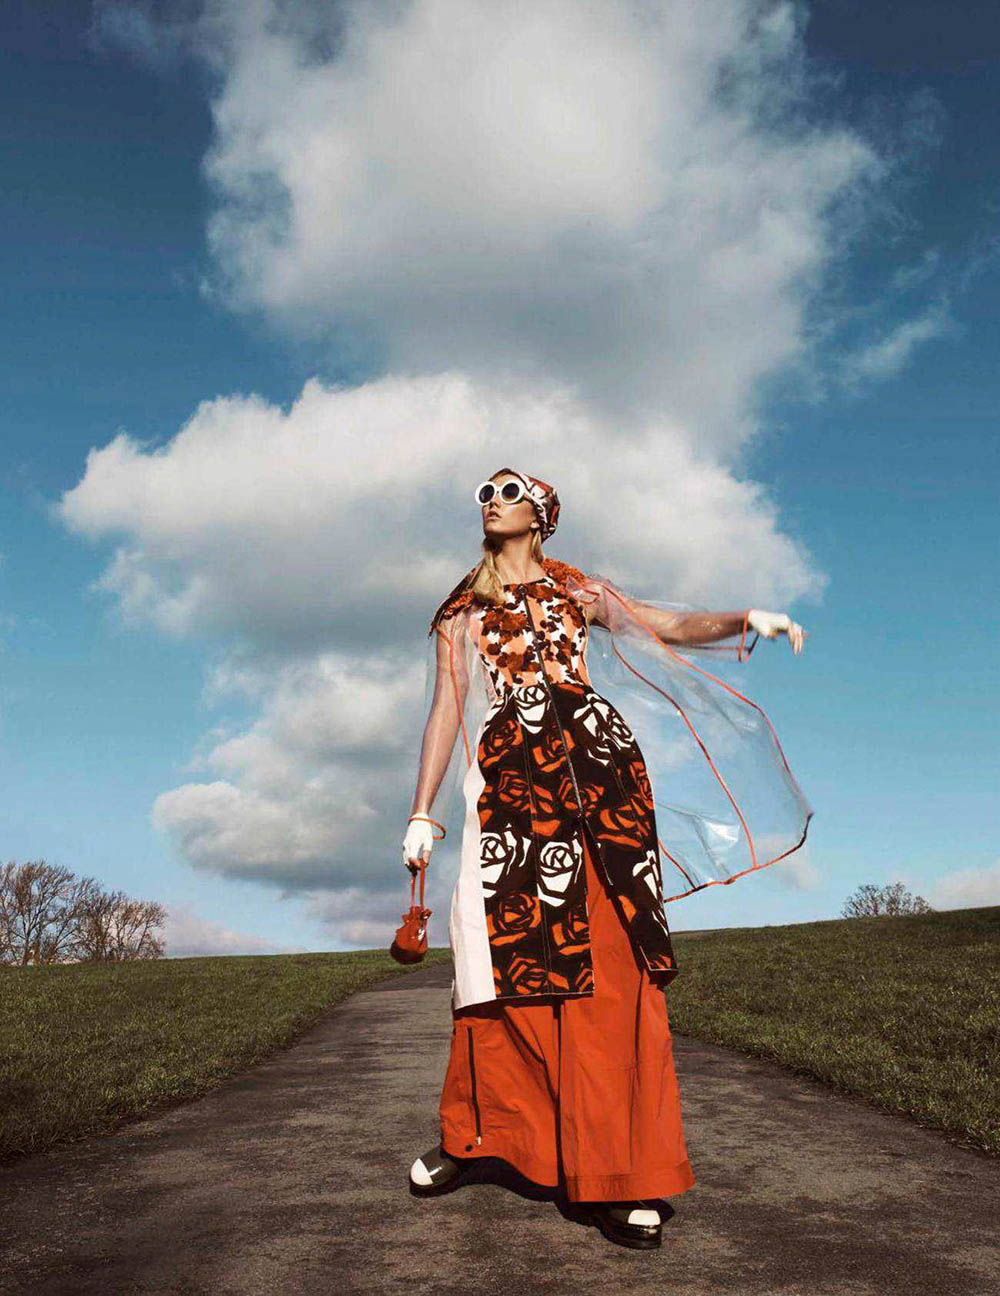 Karlie Kloss covers Vogue Spain June 2018 by Emma Summerton